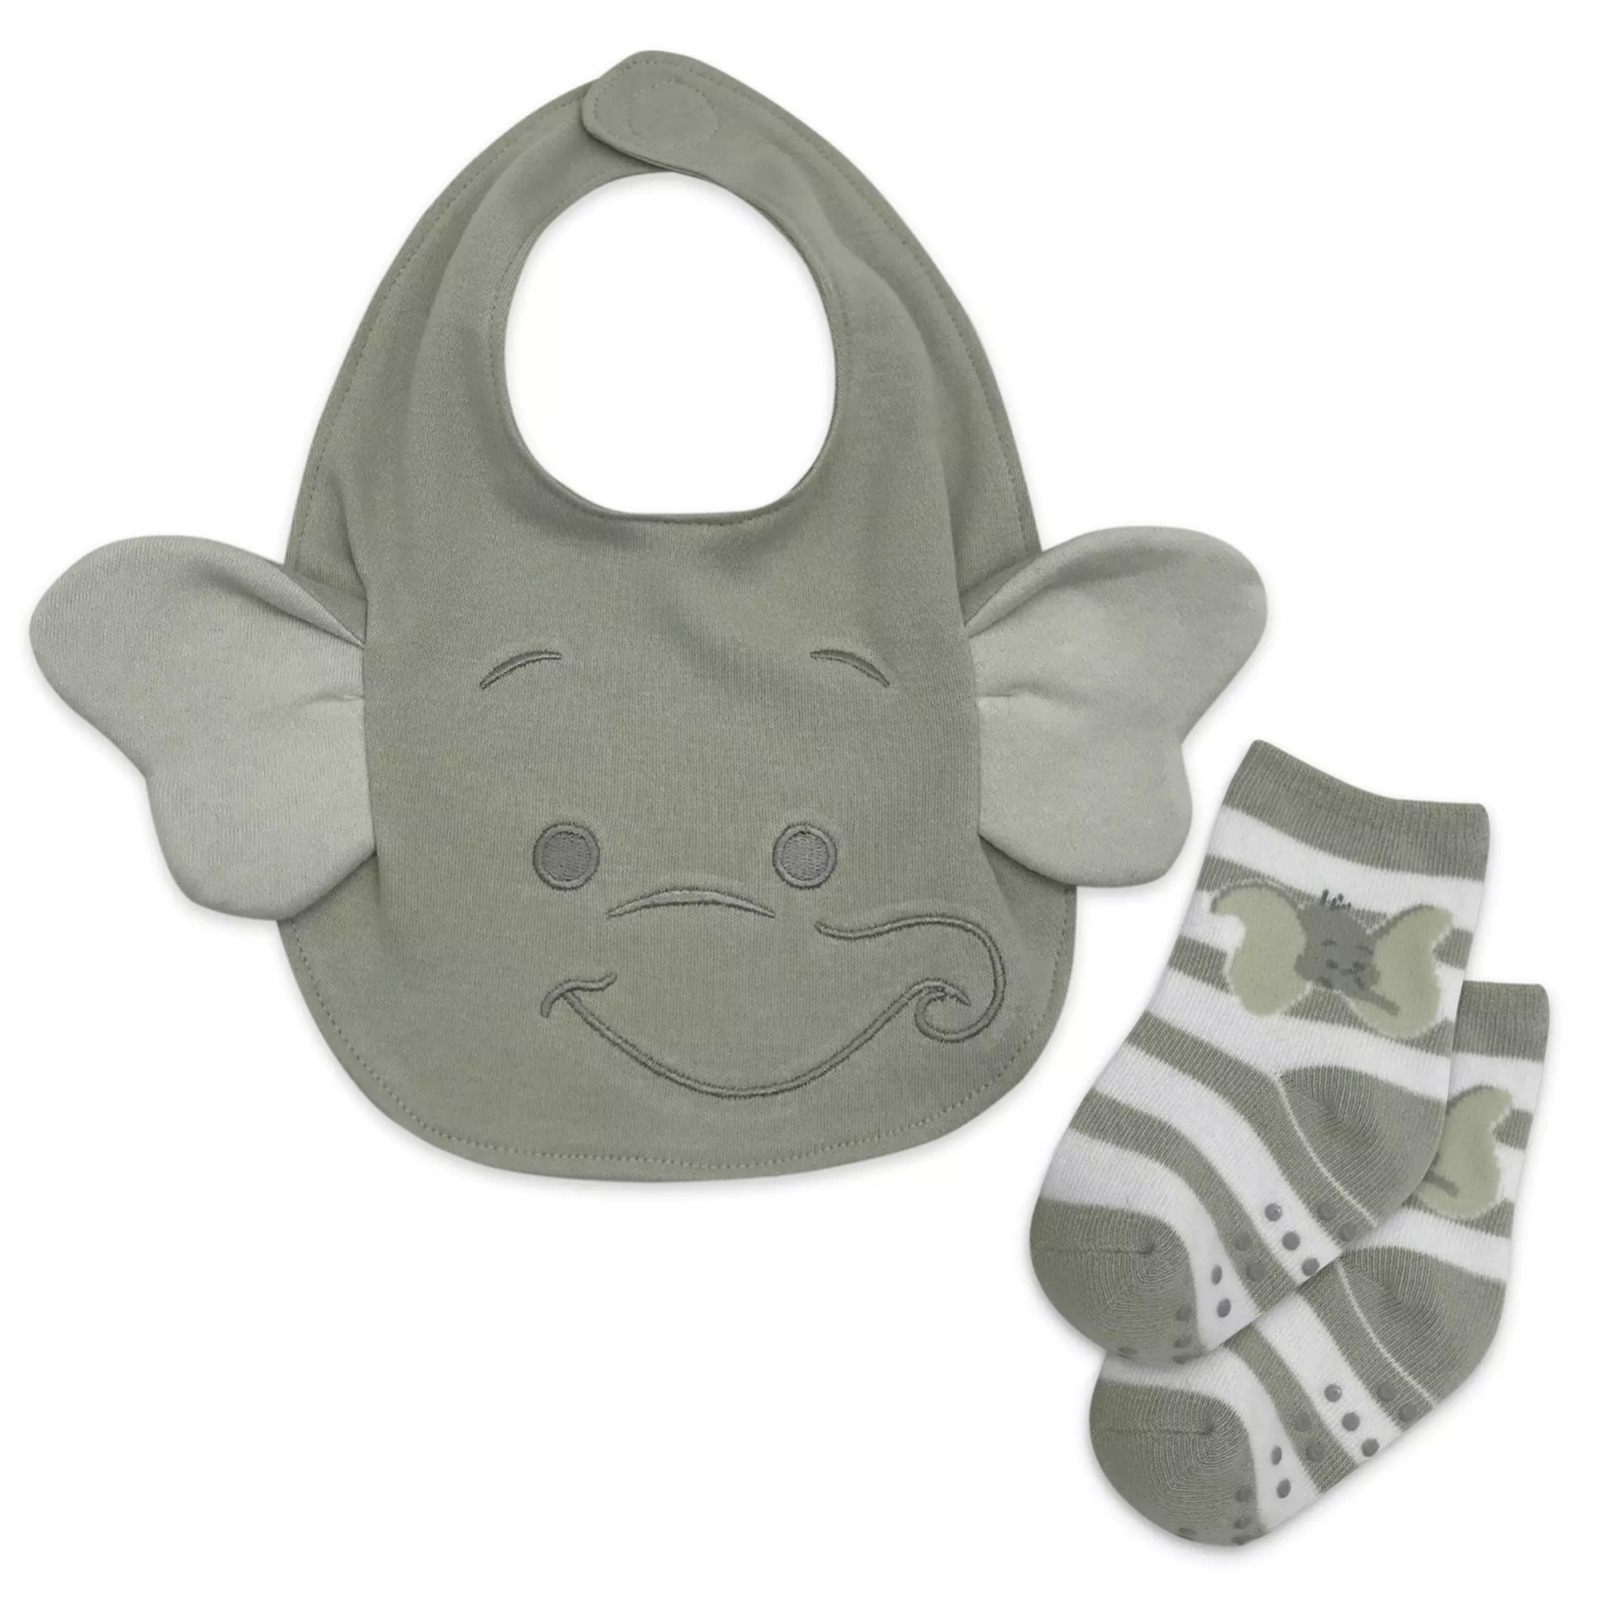 Disney Dumbo Bib And Sock Set for Baby - Size 6-12 moths - New